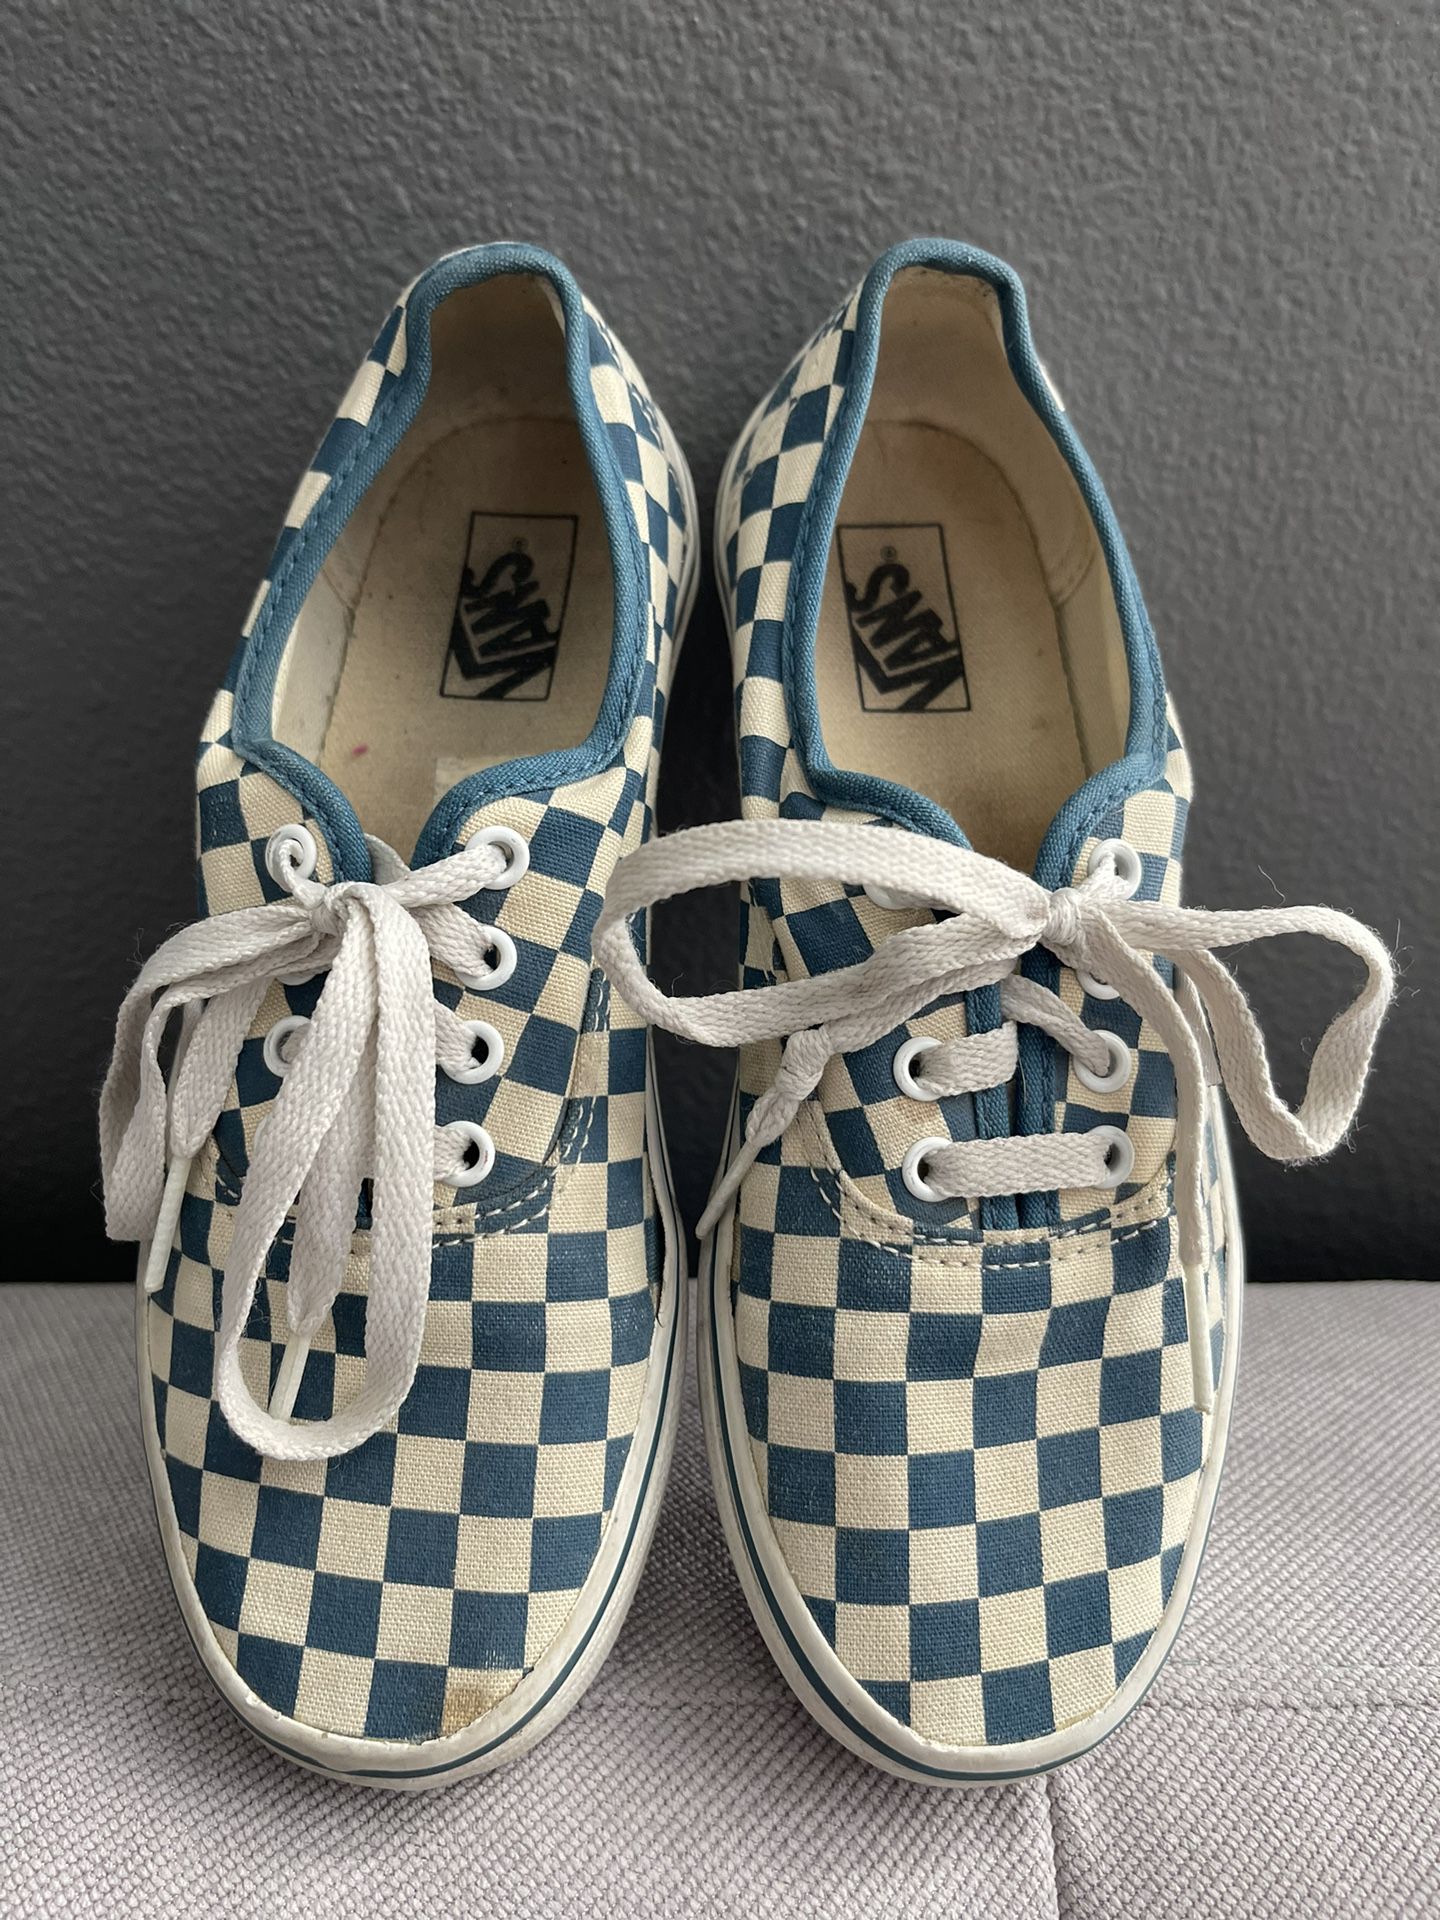 VANS Checkerboard Shoes